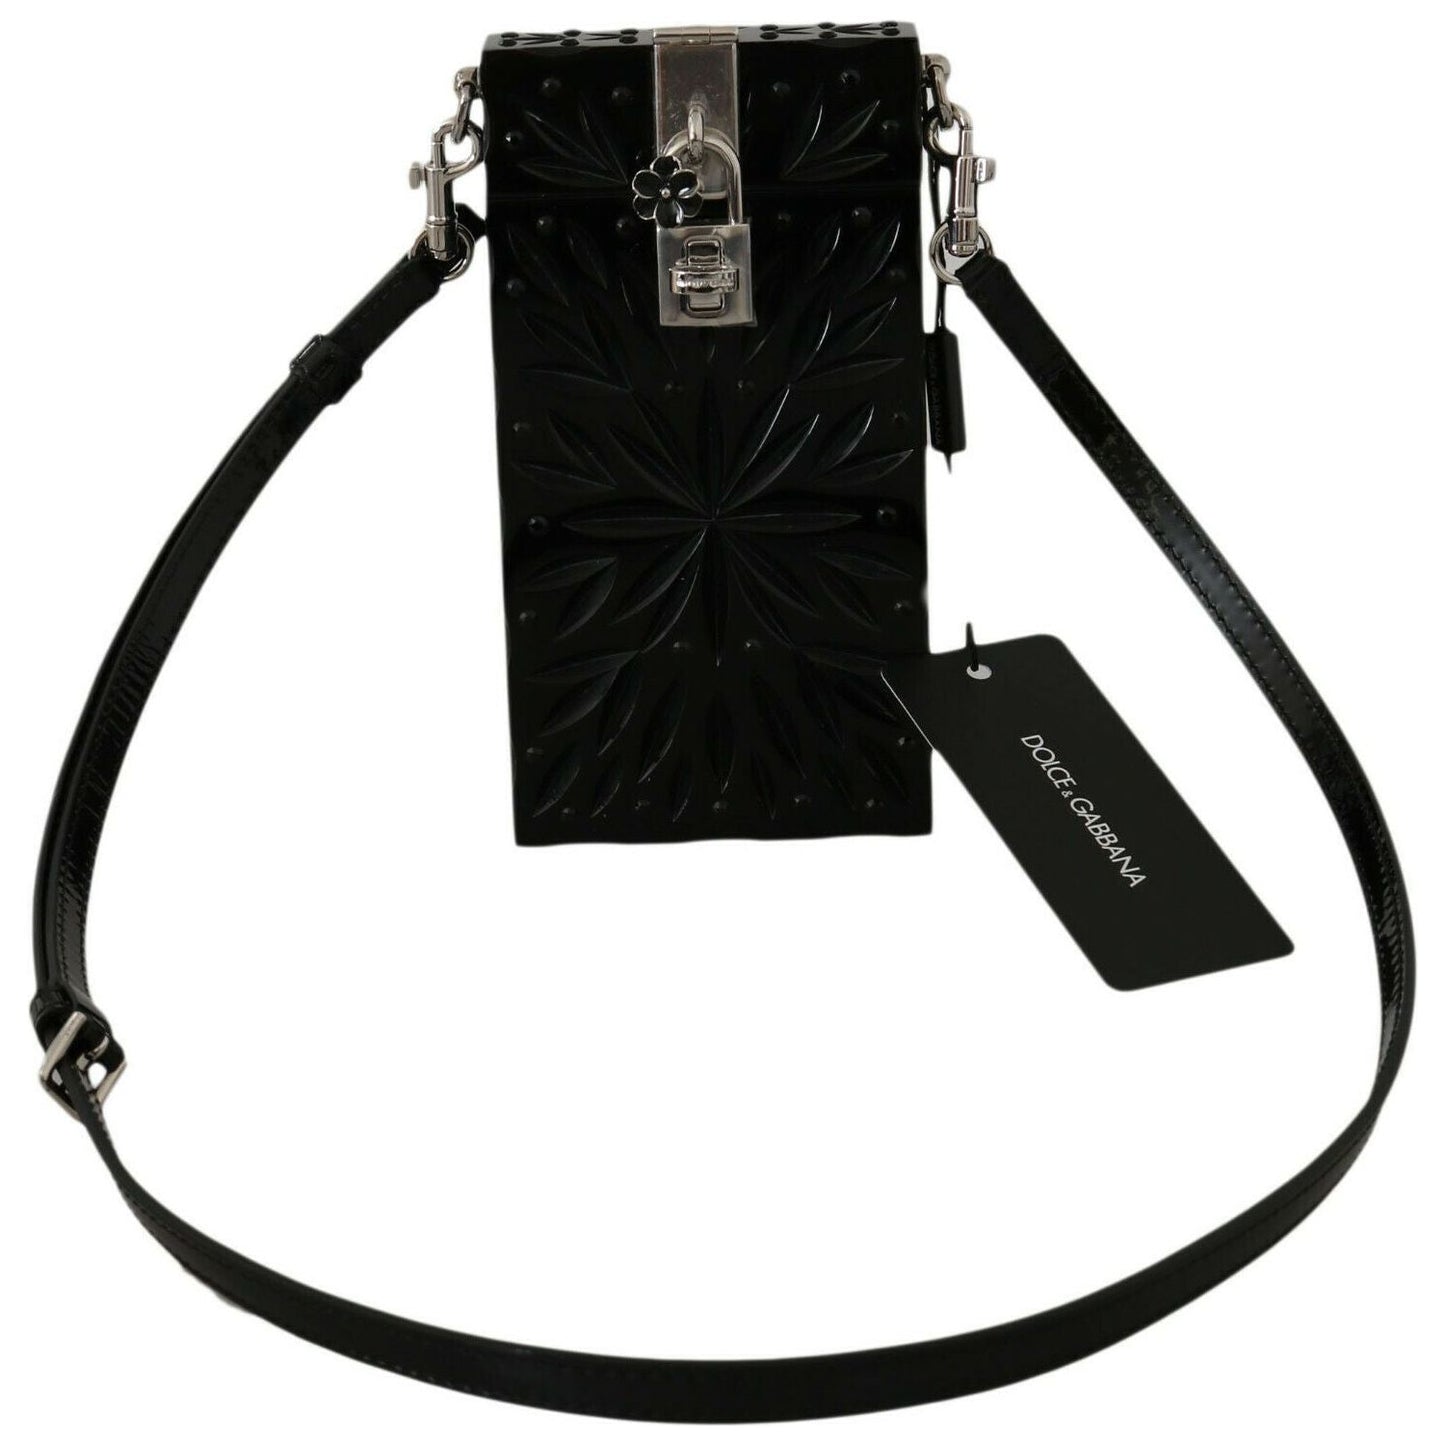 Dolce & Gabbana Exquisite Crystal-Plexi Cigarette Case Holder black-crystal-plexiglass-cross-cigarette-case-holder s-l1600-29-b0051411-5fb.jpg